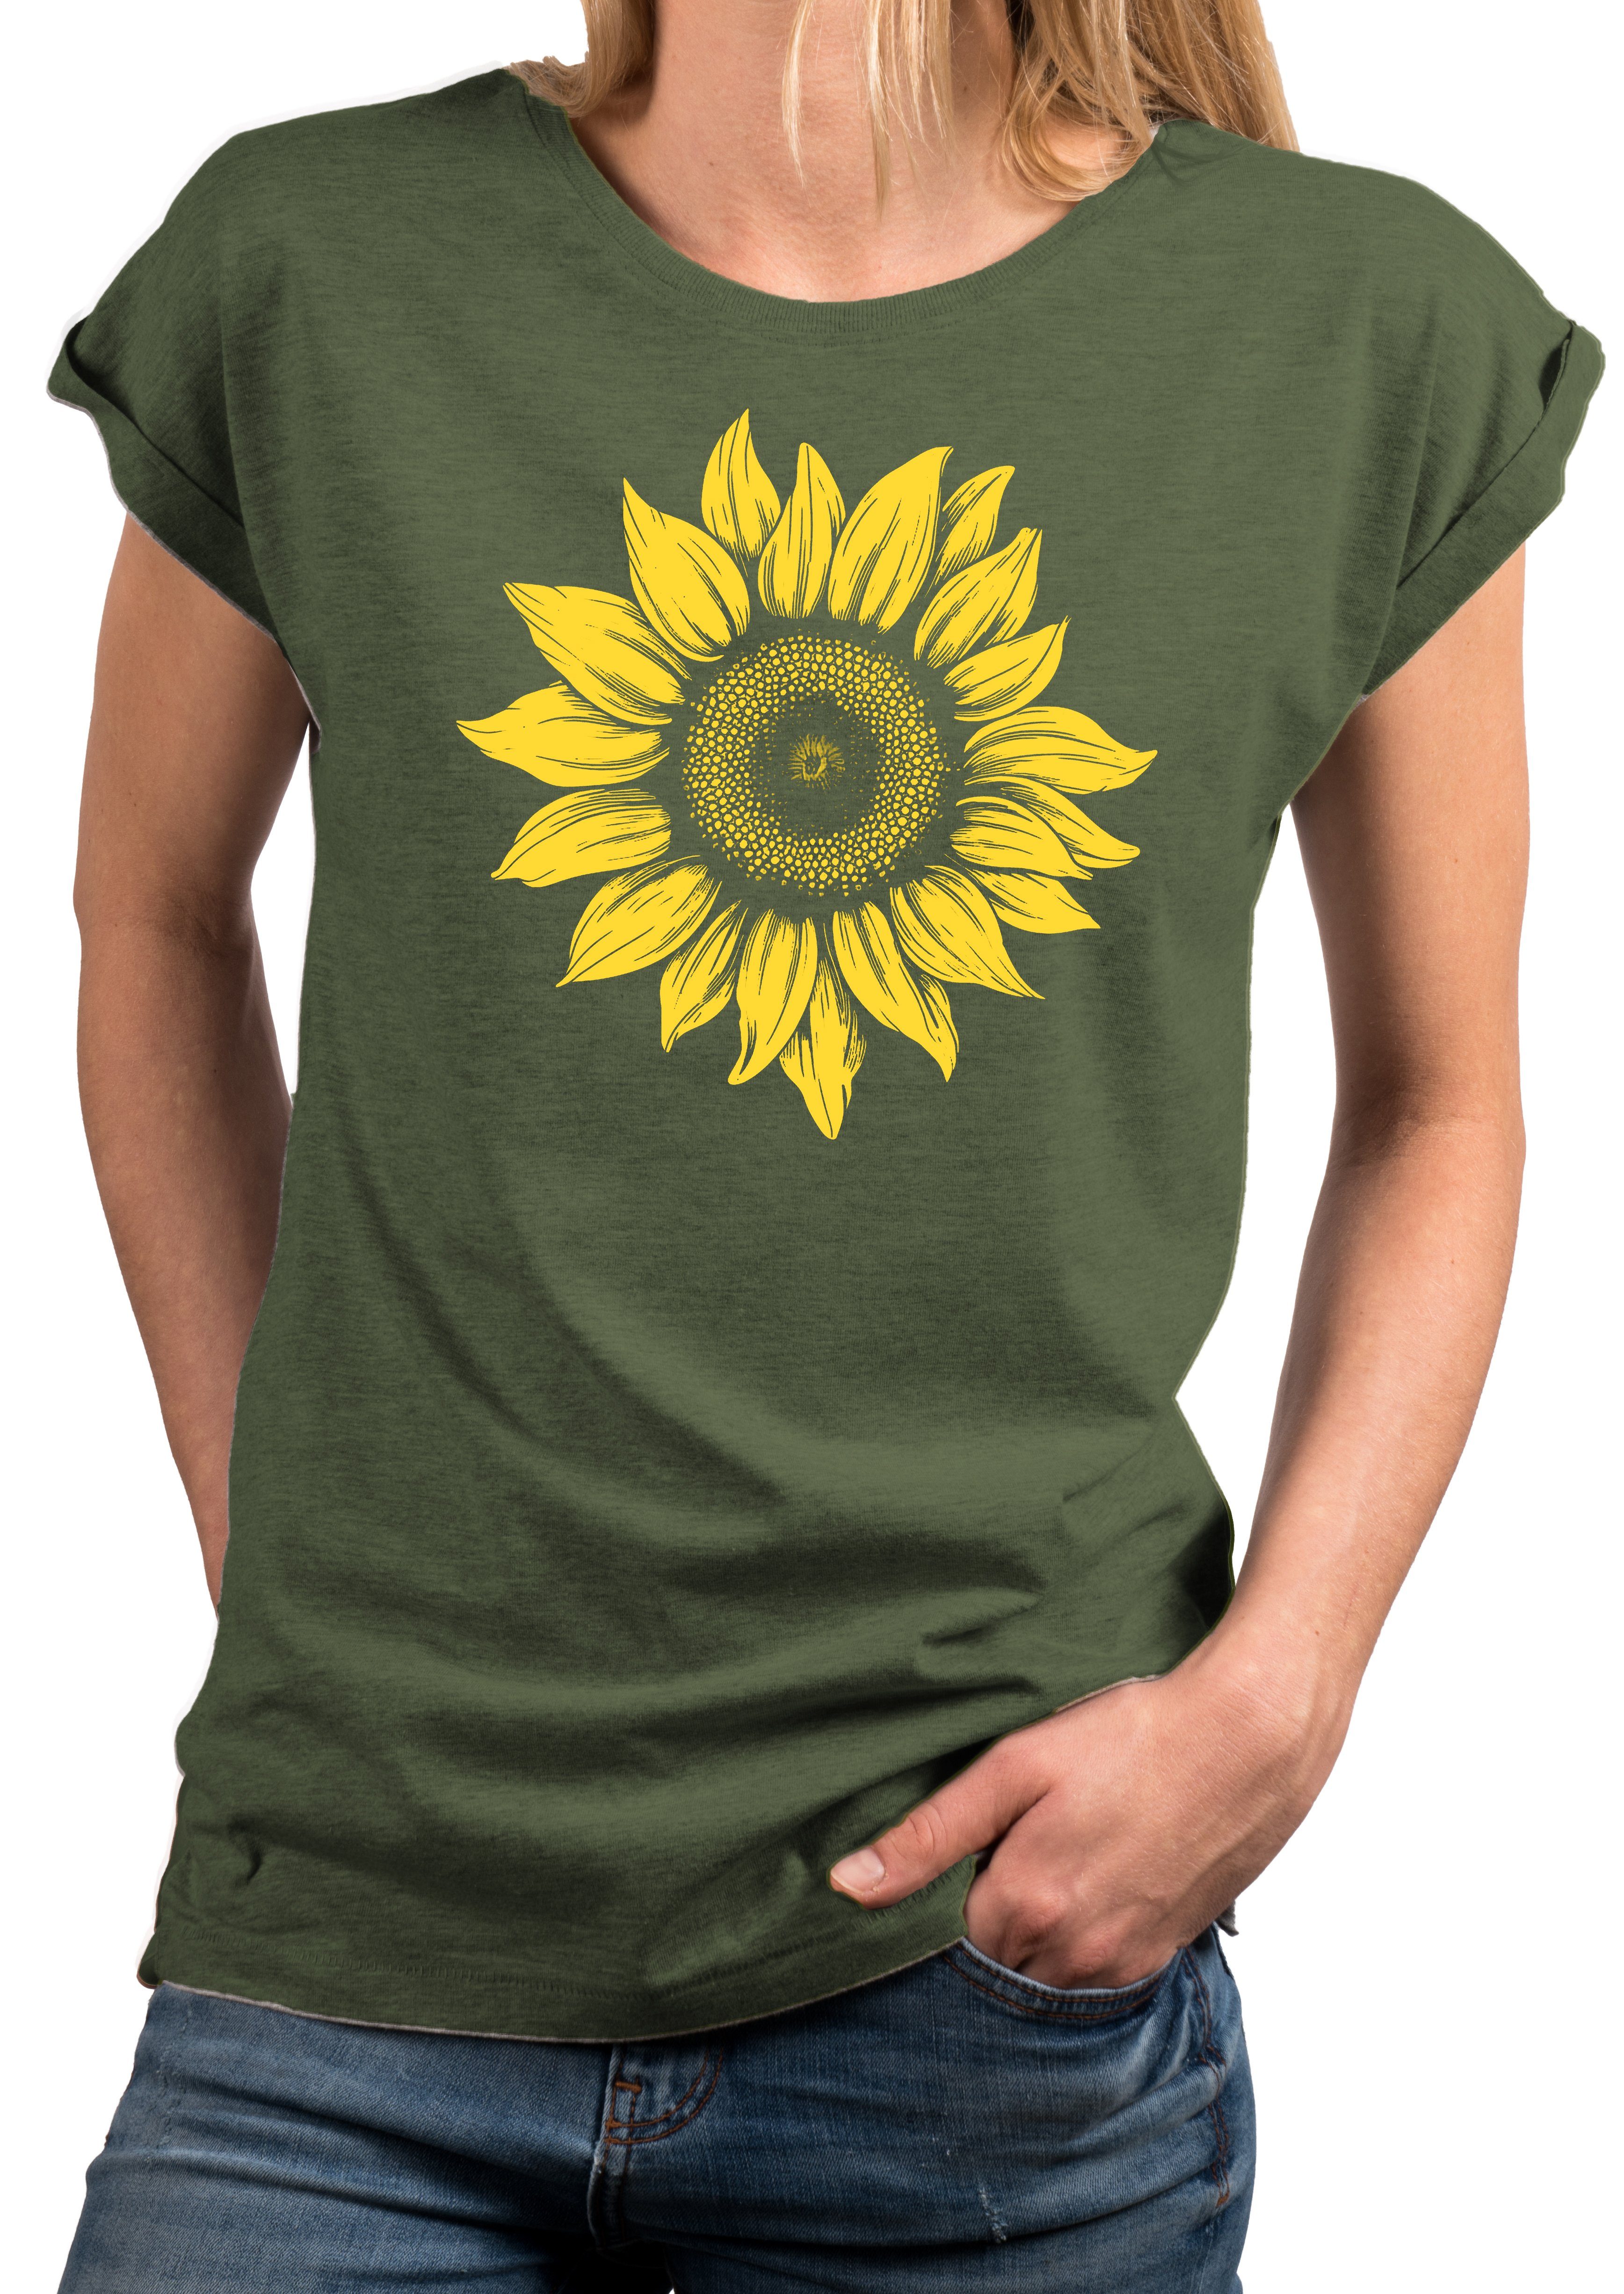 MAKAYA Print-Shirt Damen Blumenpint Sonnenblume Blumen Motiv Blumenmuster Sommer Top Baumwolle, große Größen Grün